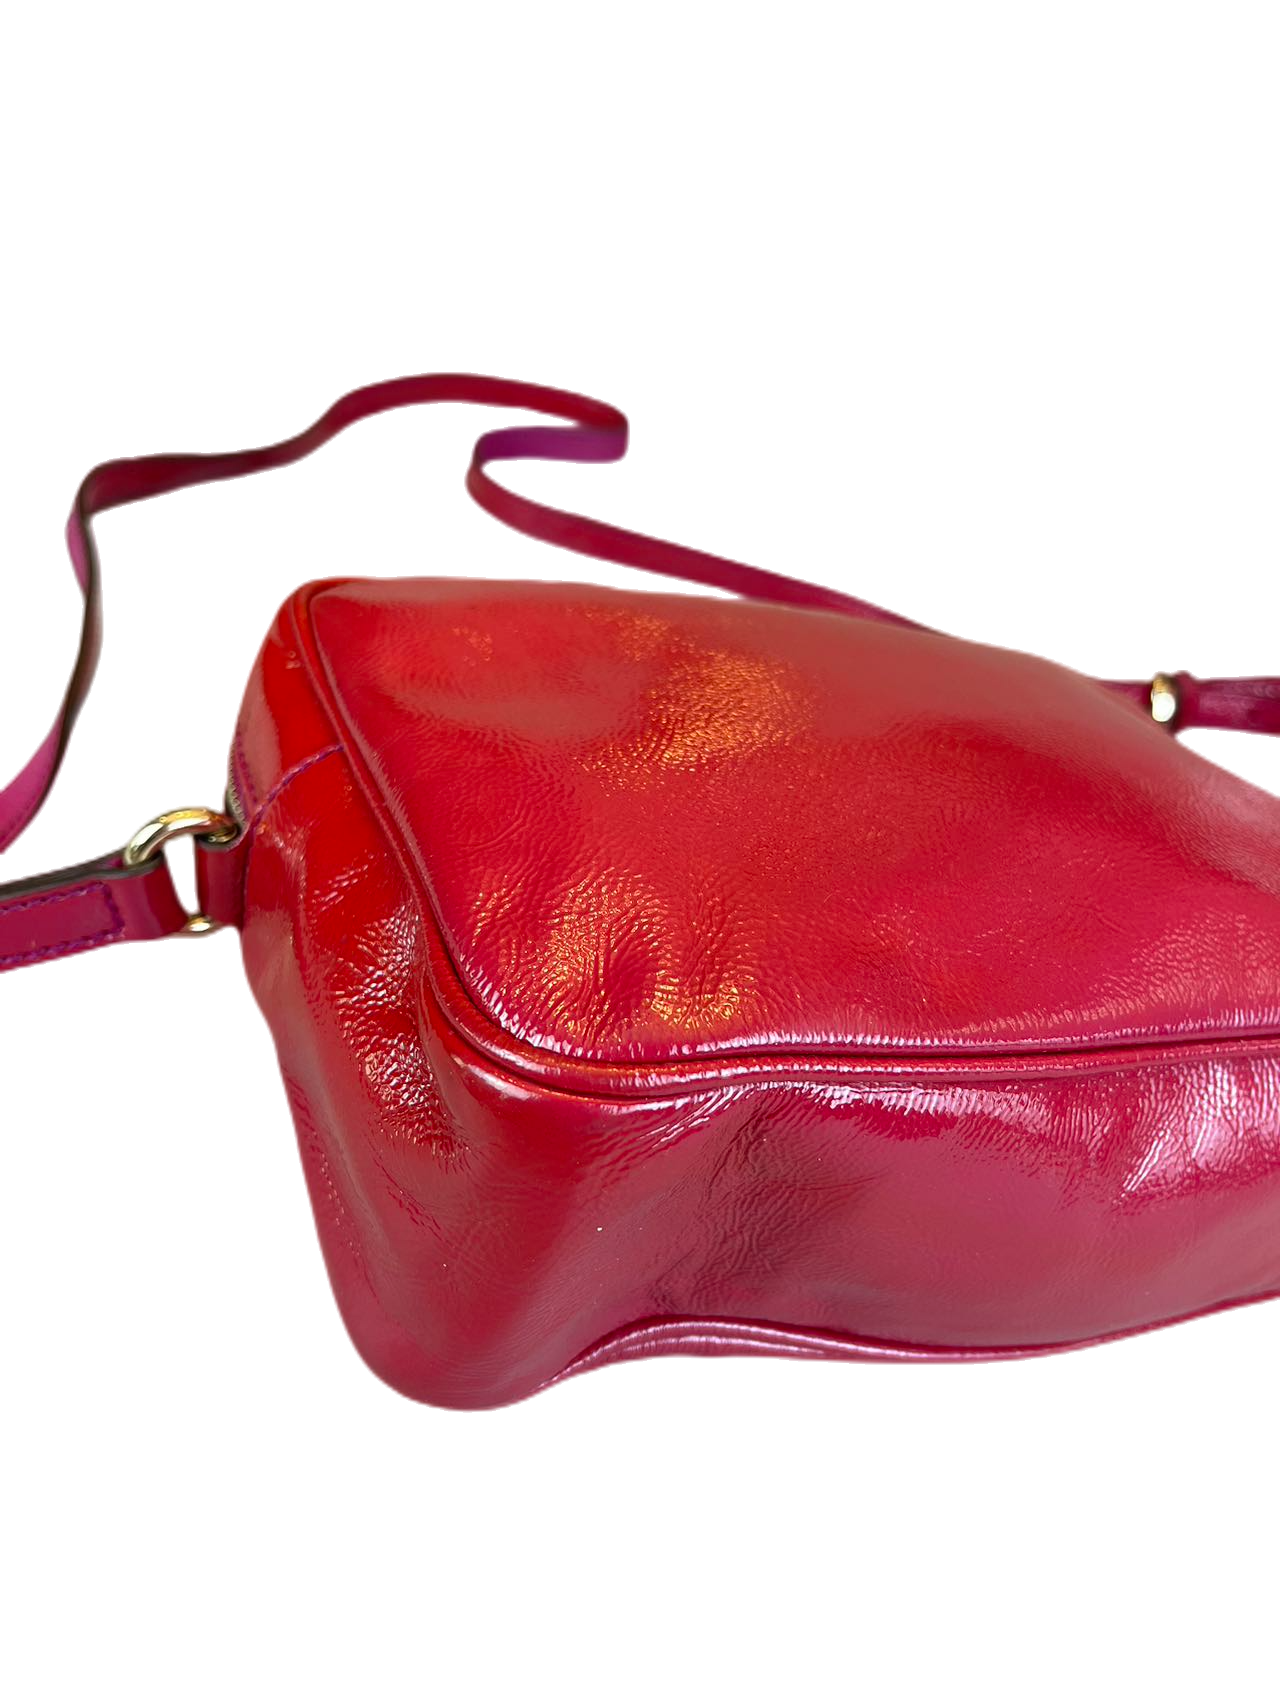 Preloved Gucci GG Logo Patent Leather Disco Shoulder Bag Crossbody